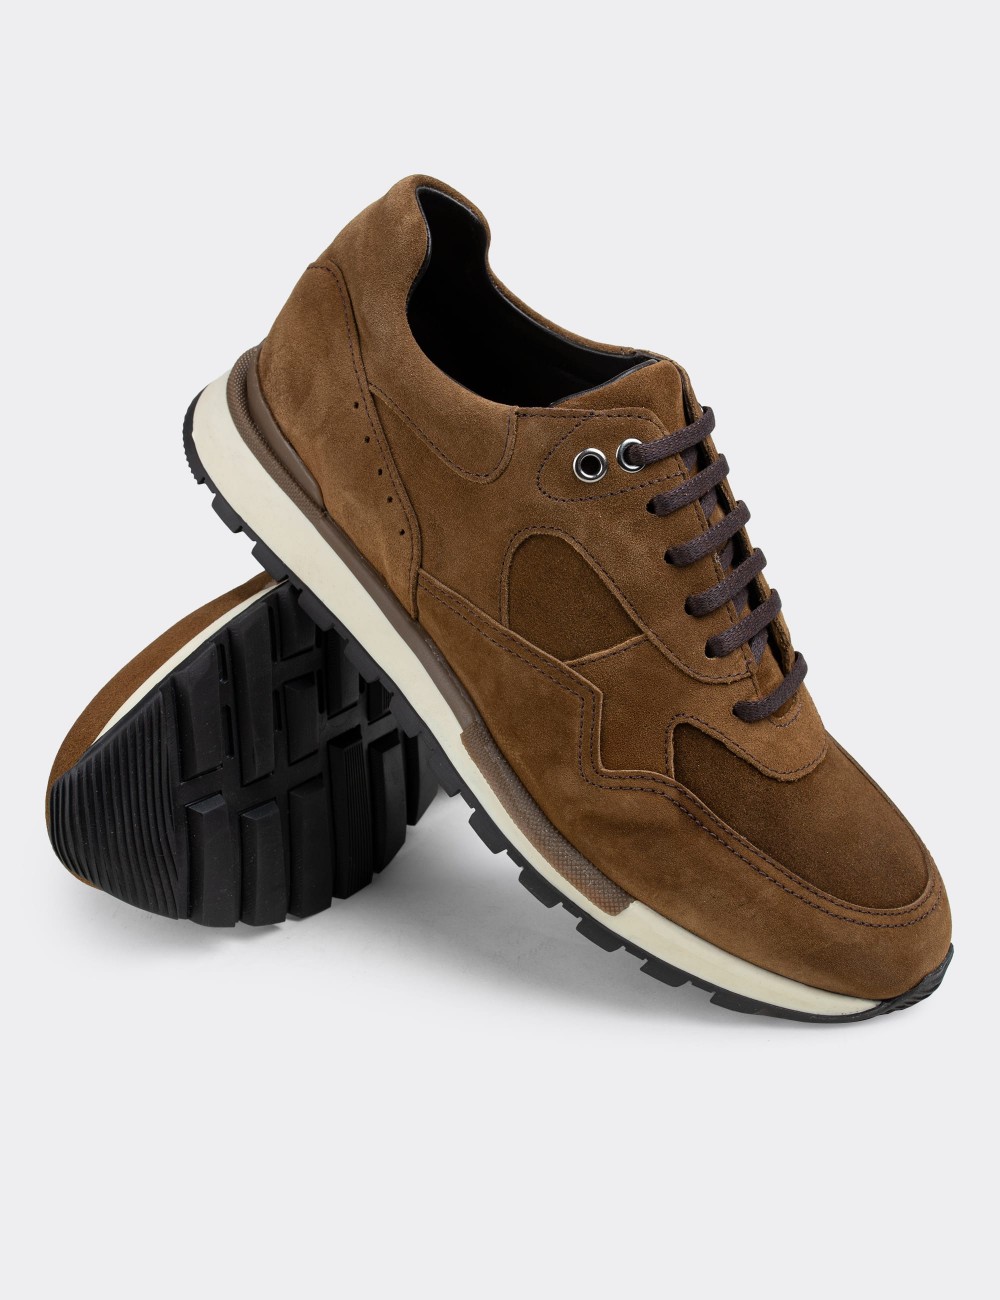 Tan Suede Leather Sneakers - 01818MTBAT02